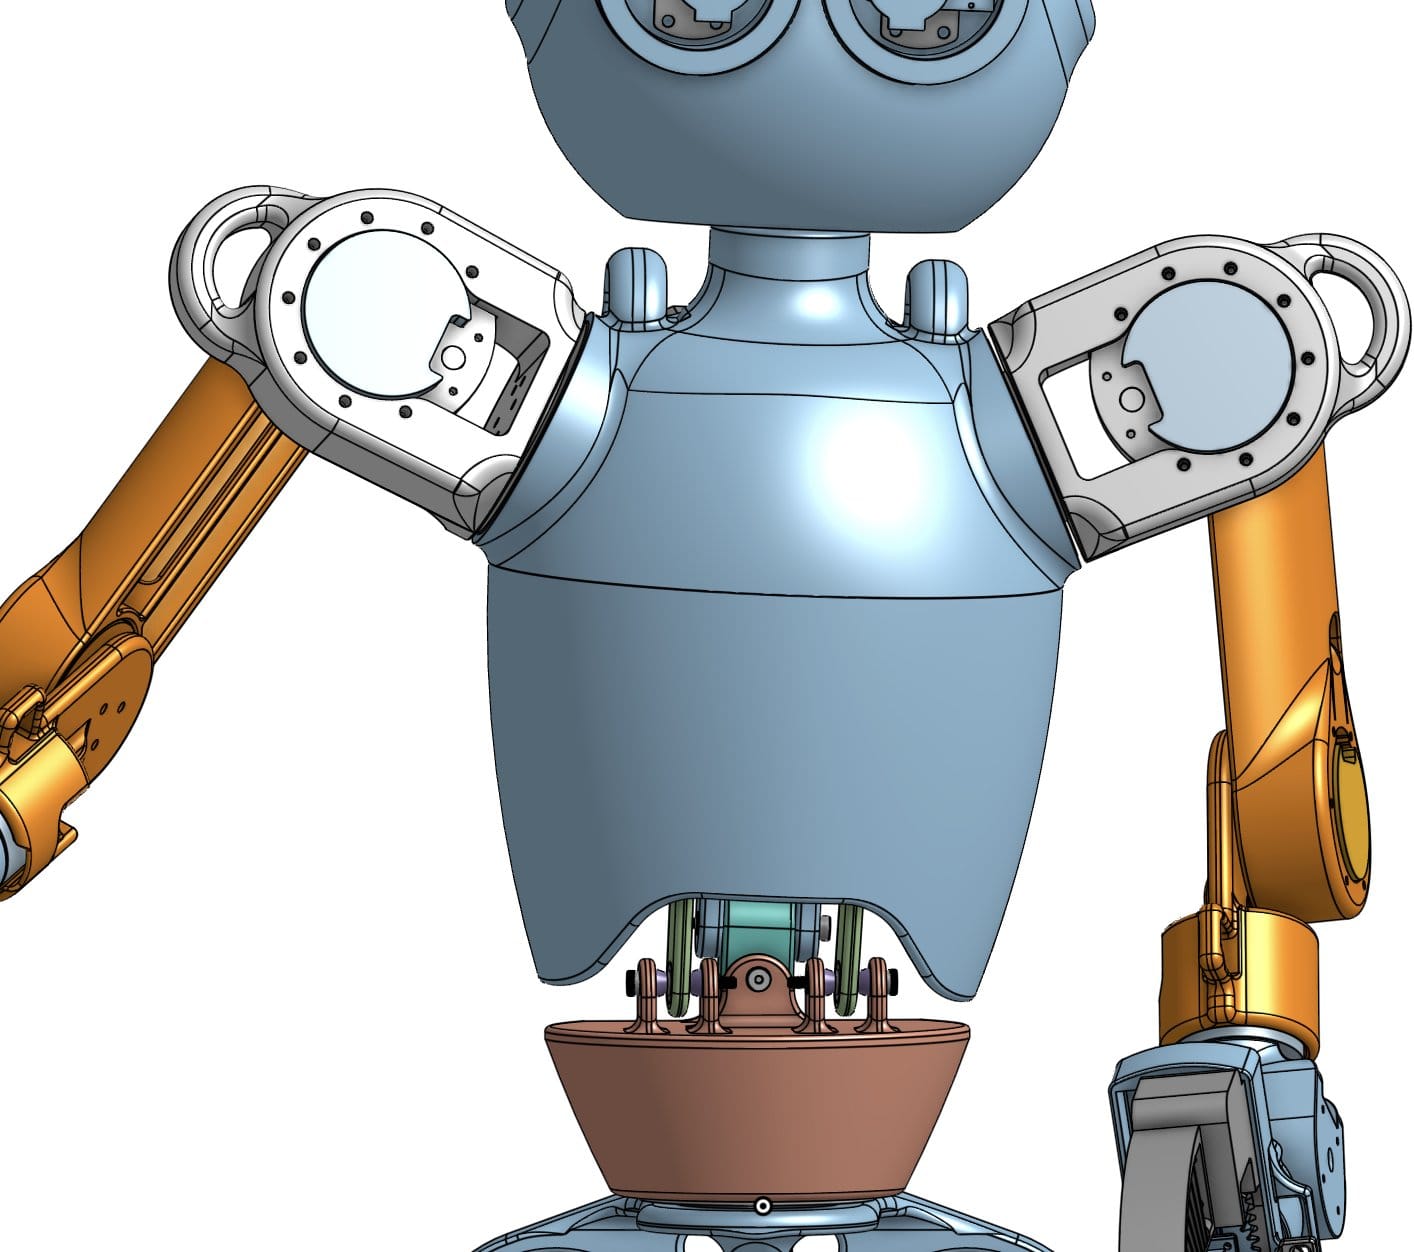 K-Scale Labs - Open-source humanoid robots